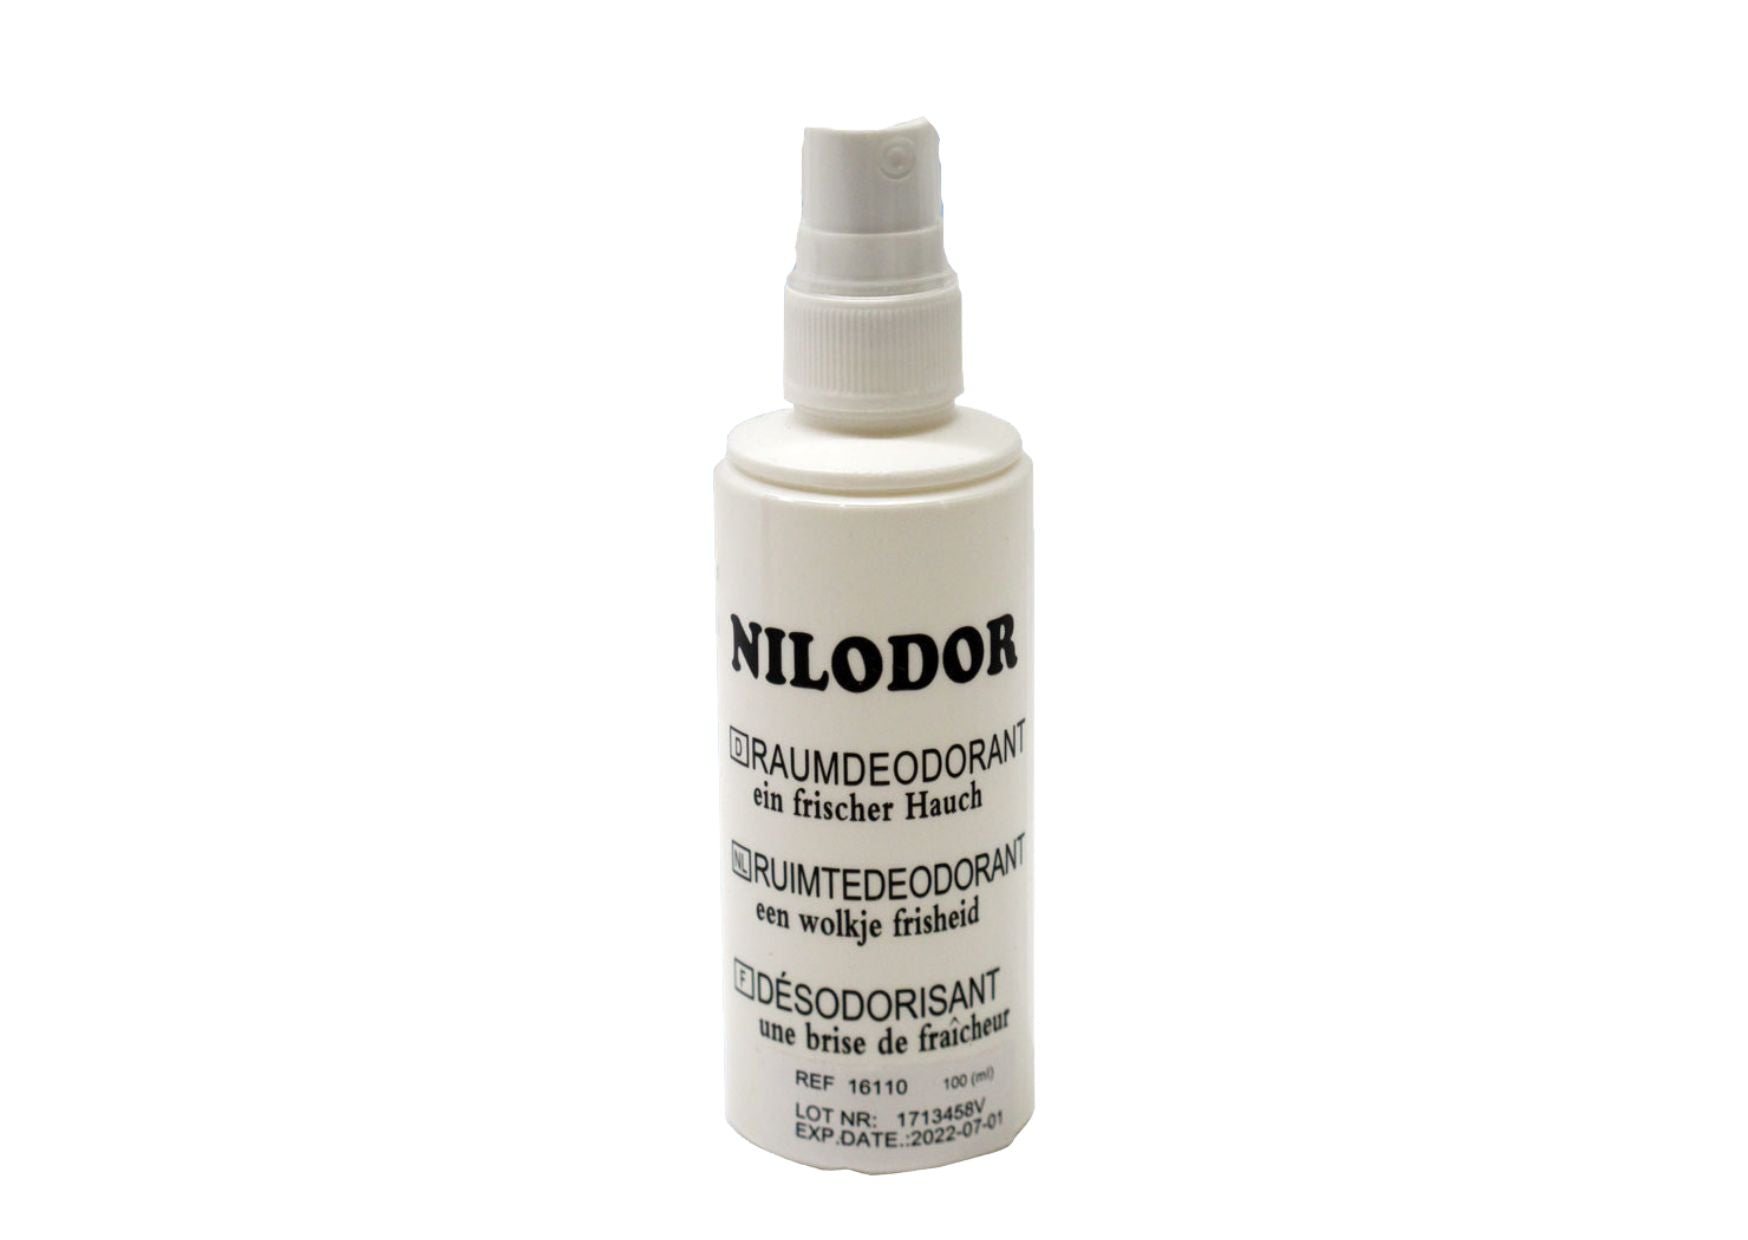 Nilodor pump spray, deodorant concentrate, 100 ml bottle